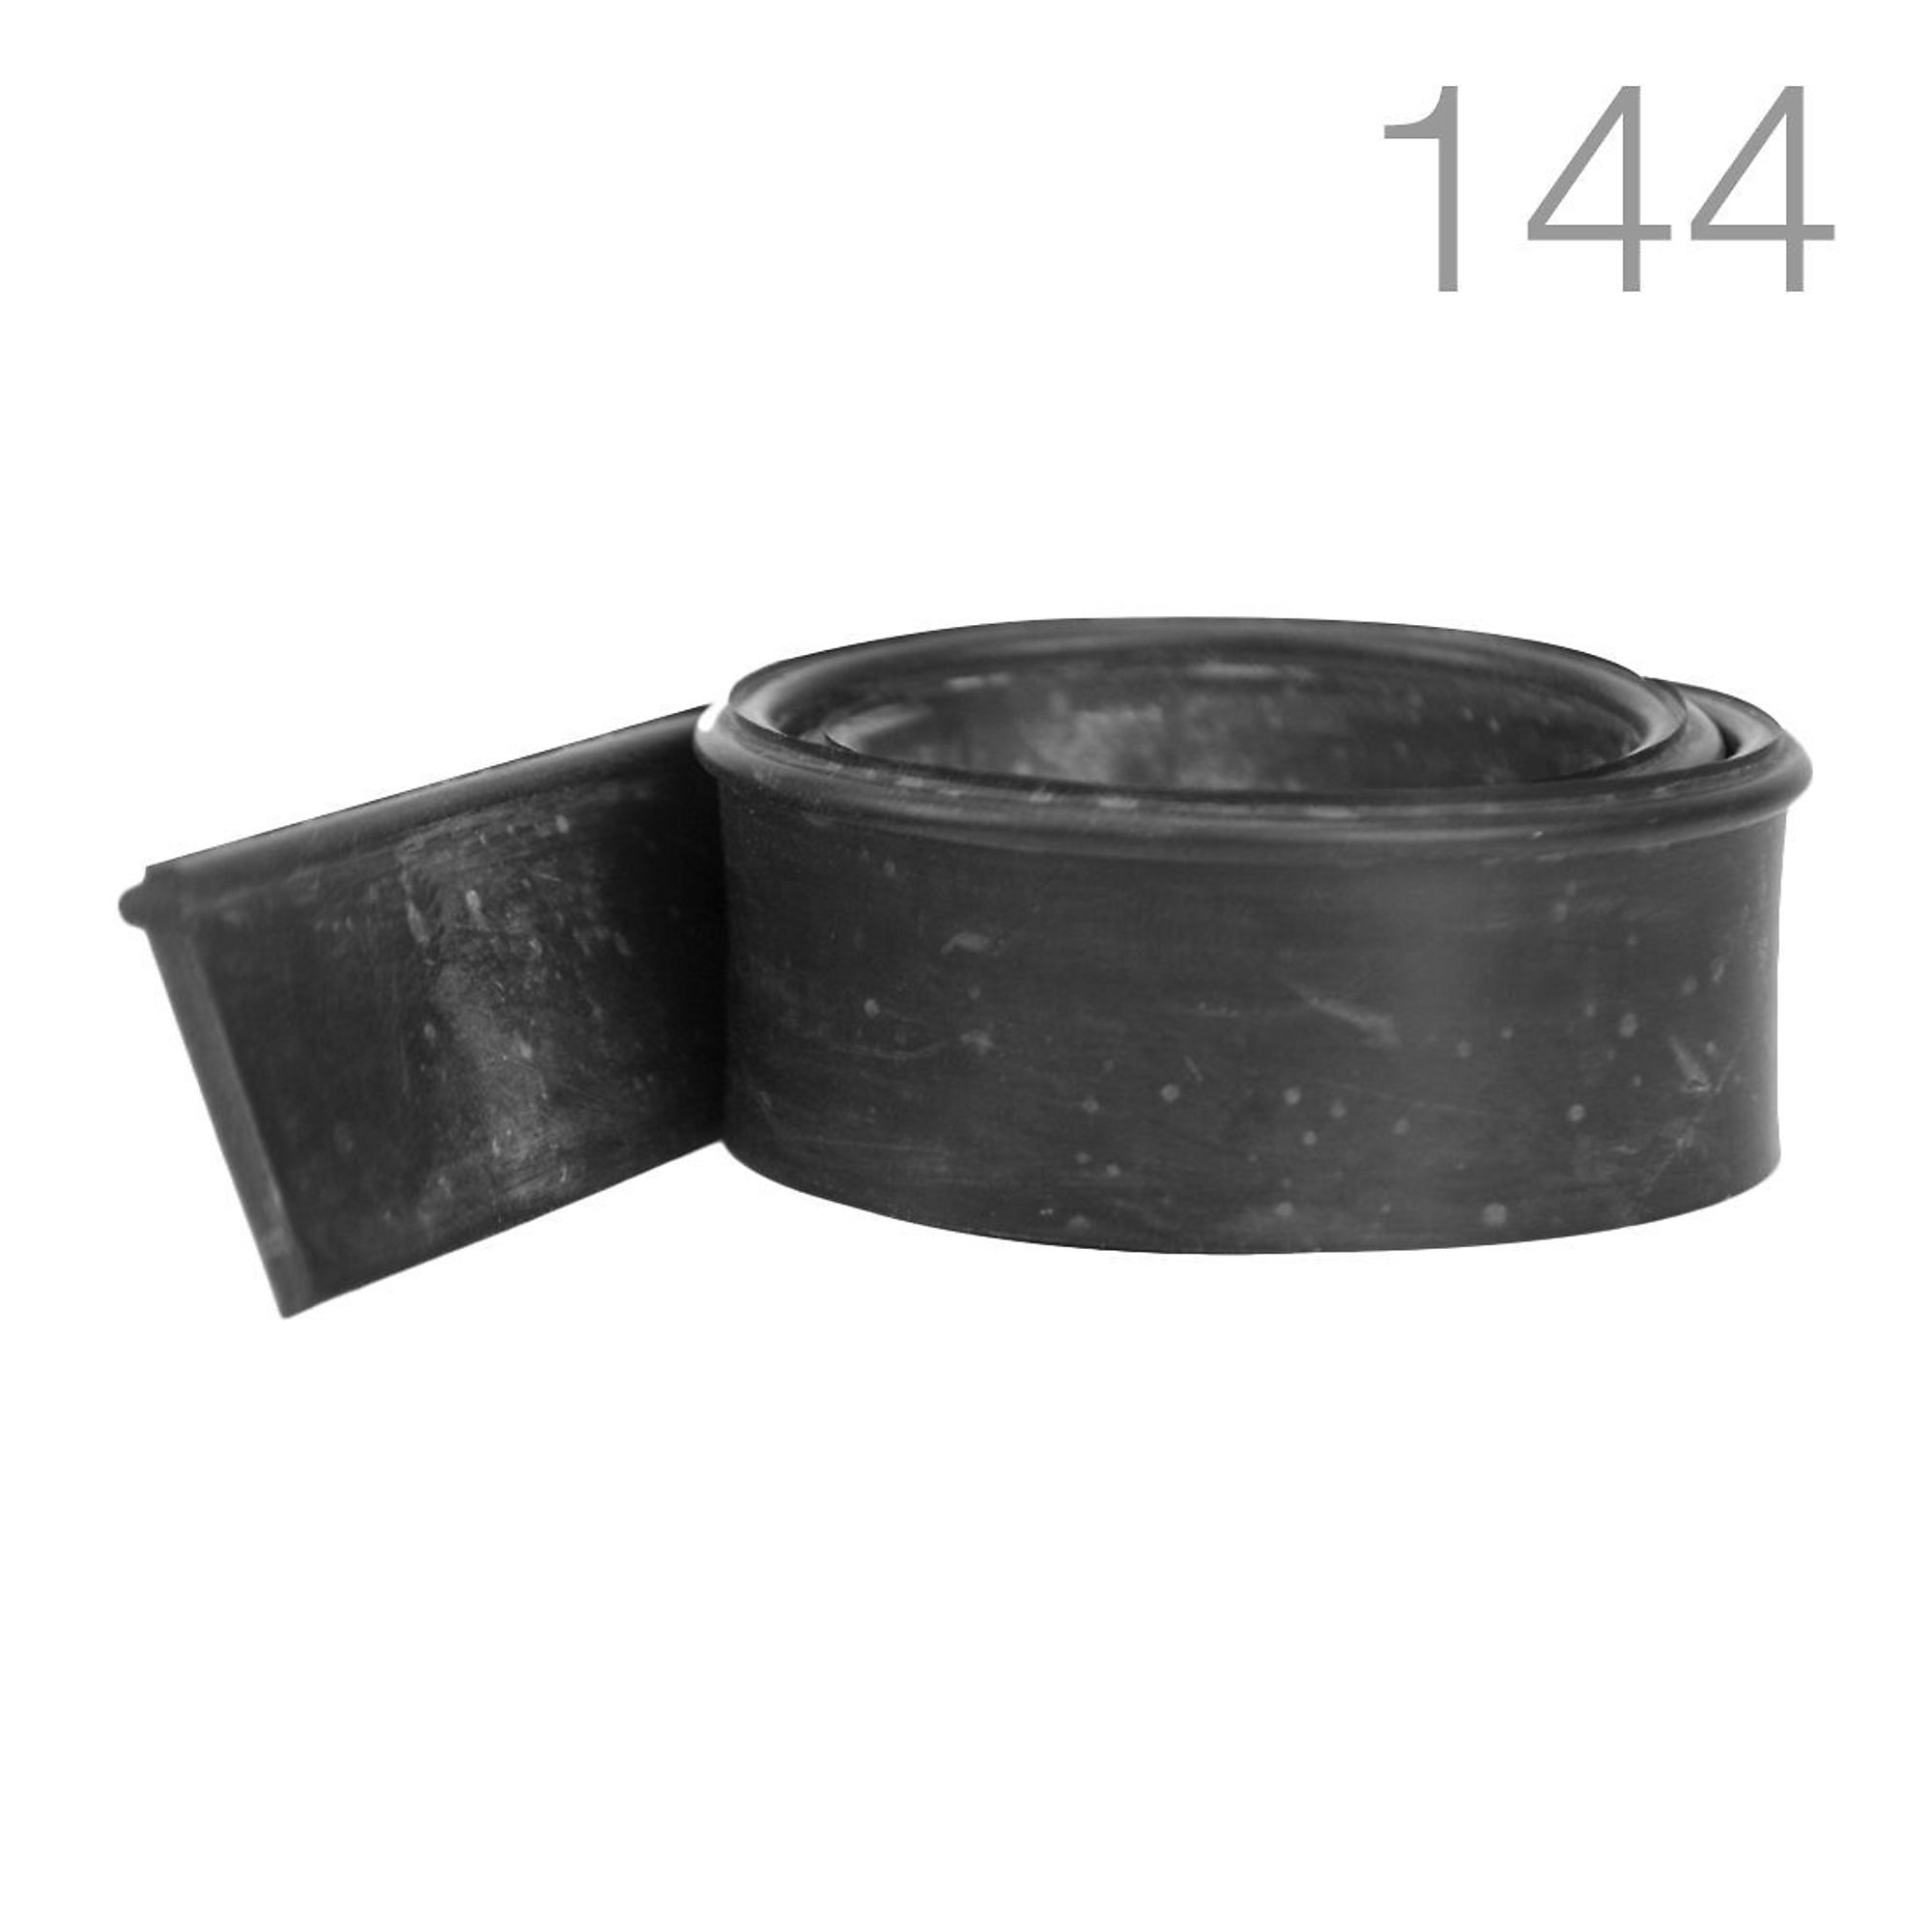 BlackDiamond, Flat Top Soft Squeegee Rubber Gross - 37Inch, Model 012-05-144